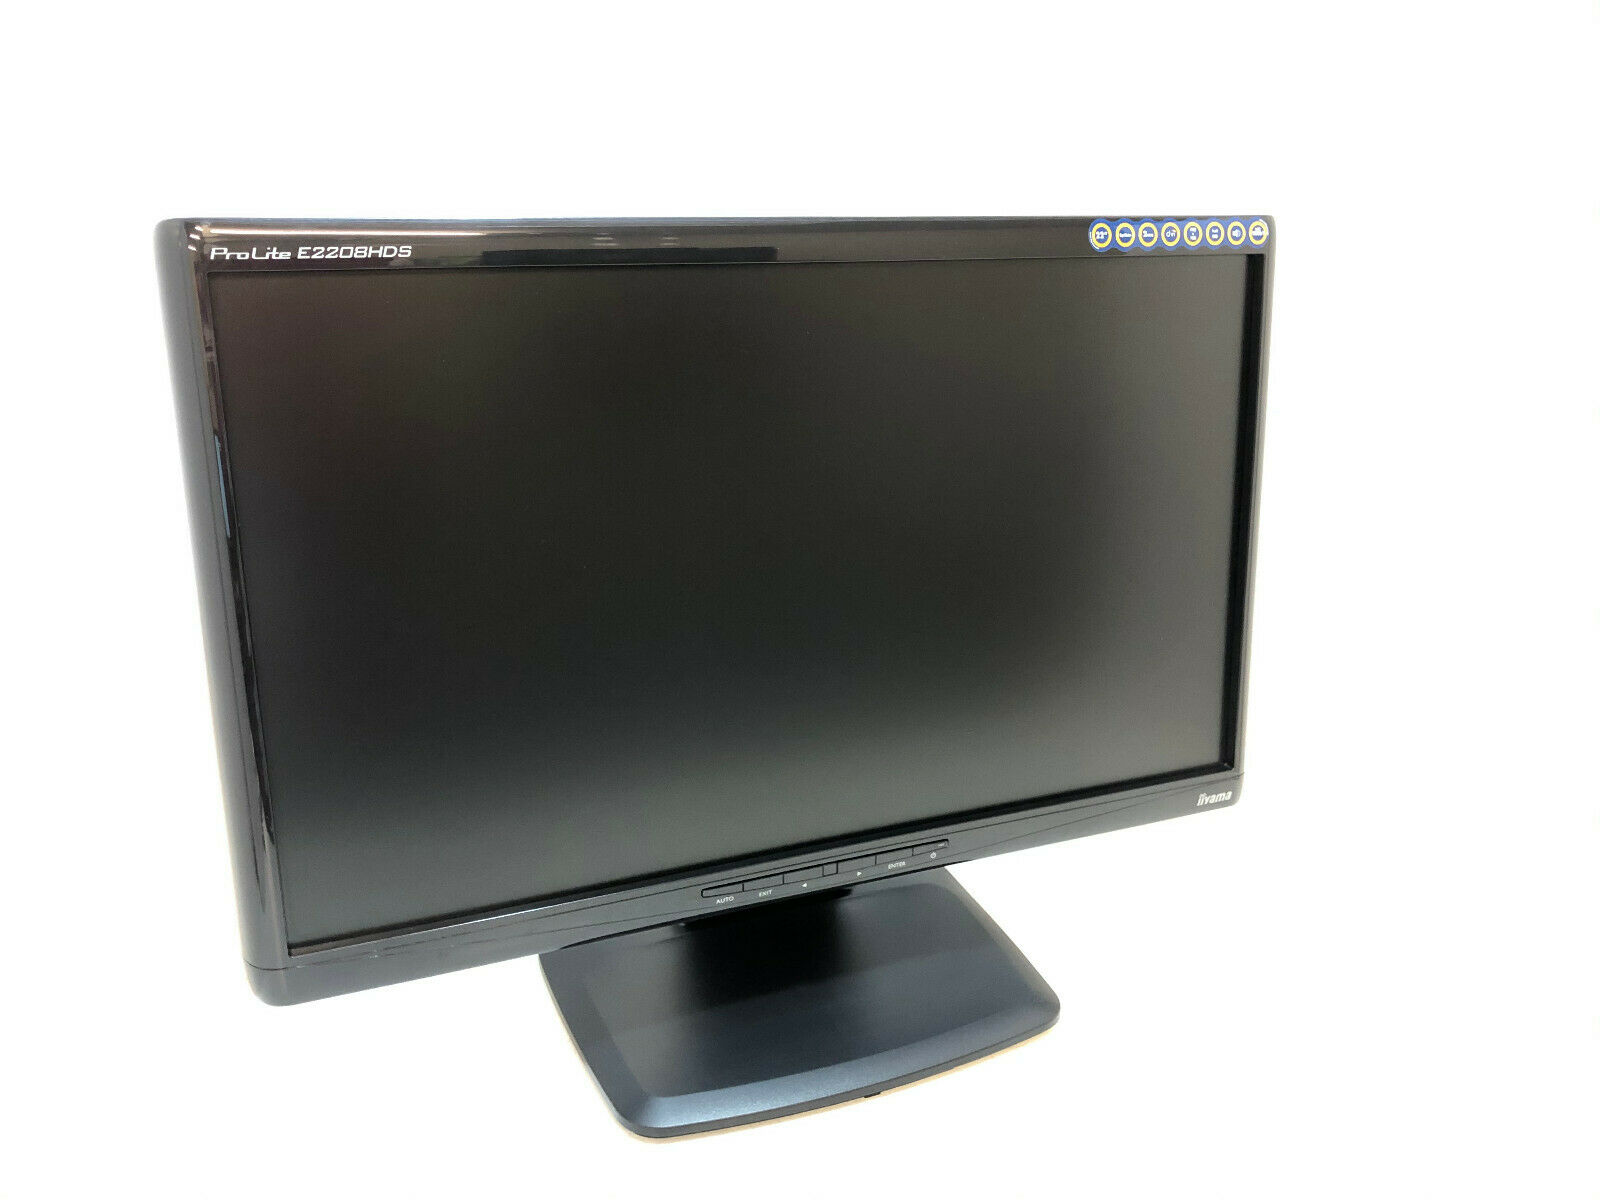 Refurbished Iiyama Prolite E2208HDS LCD Monitor